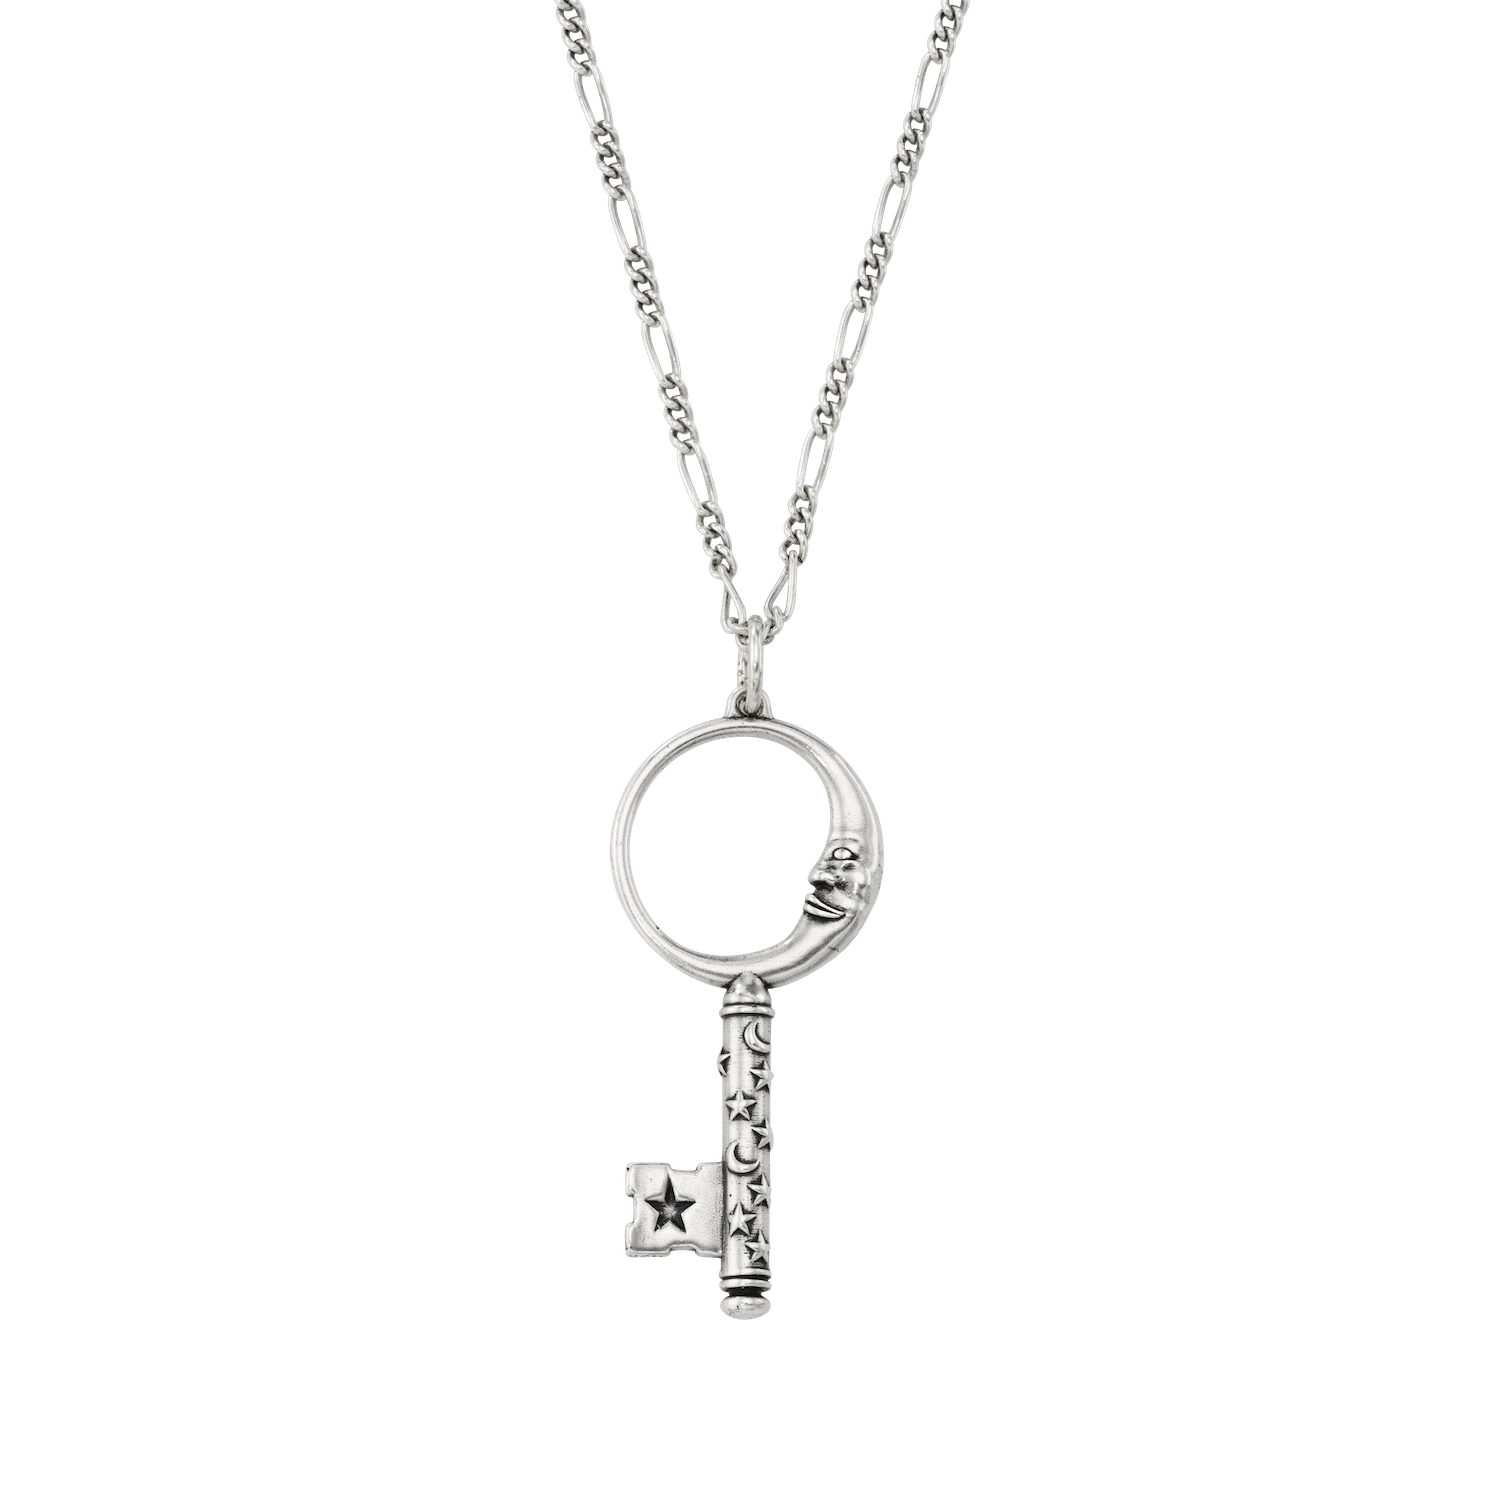 Silver Key Pendant Necklace Silver Key Necklace Necklaces 